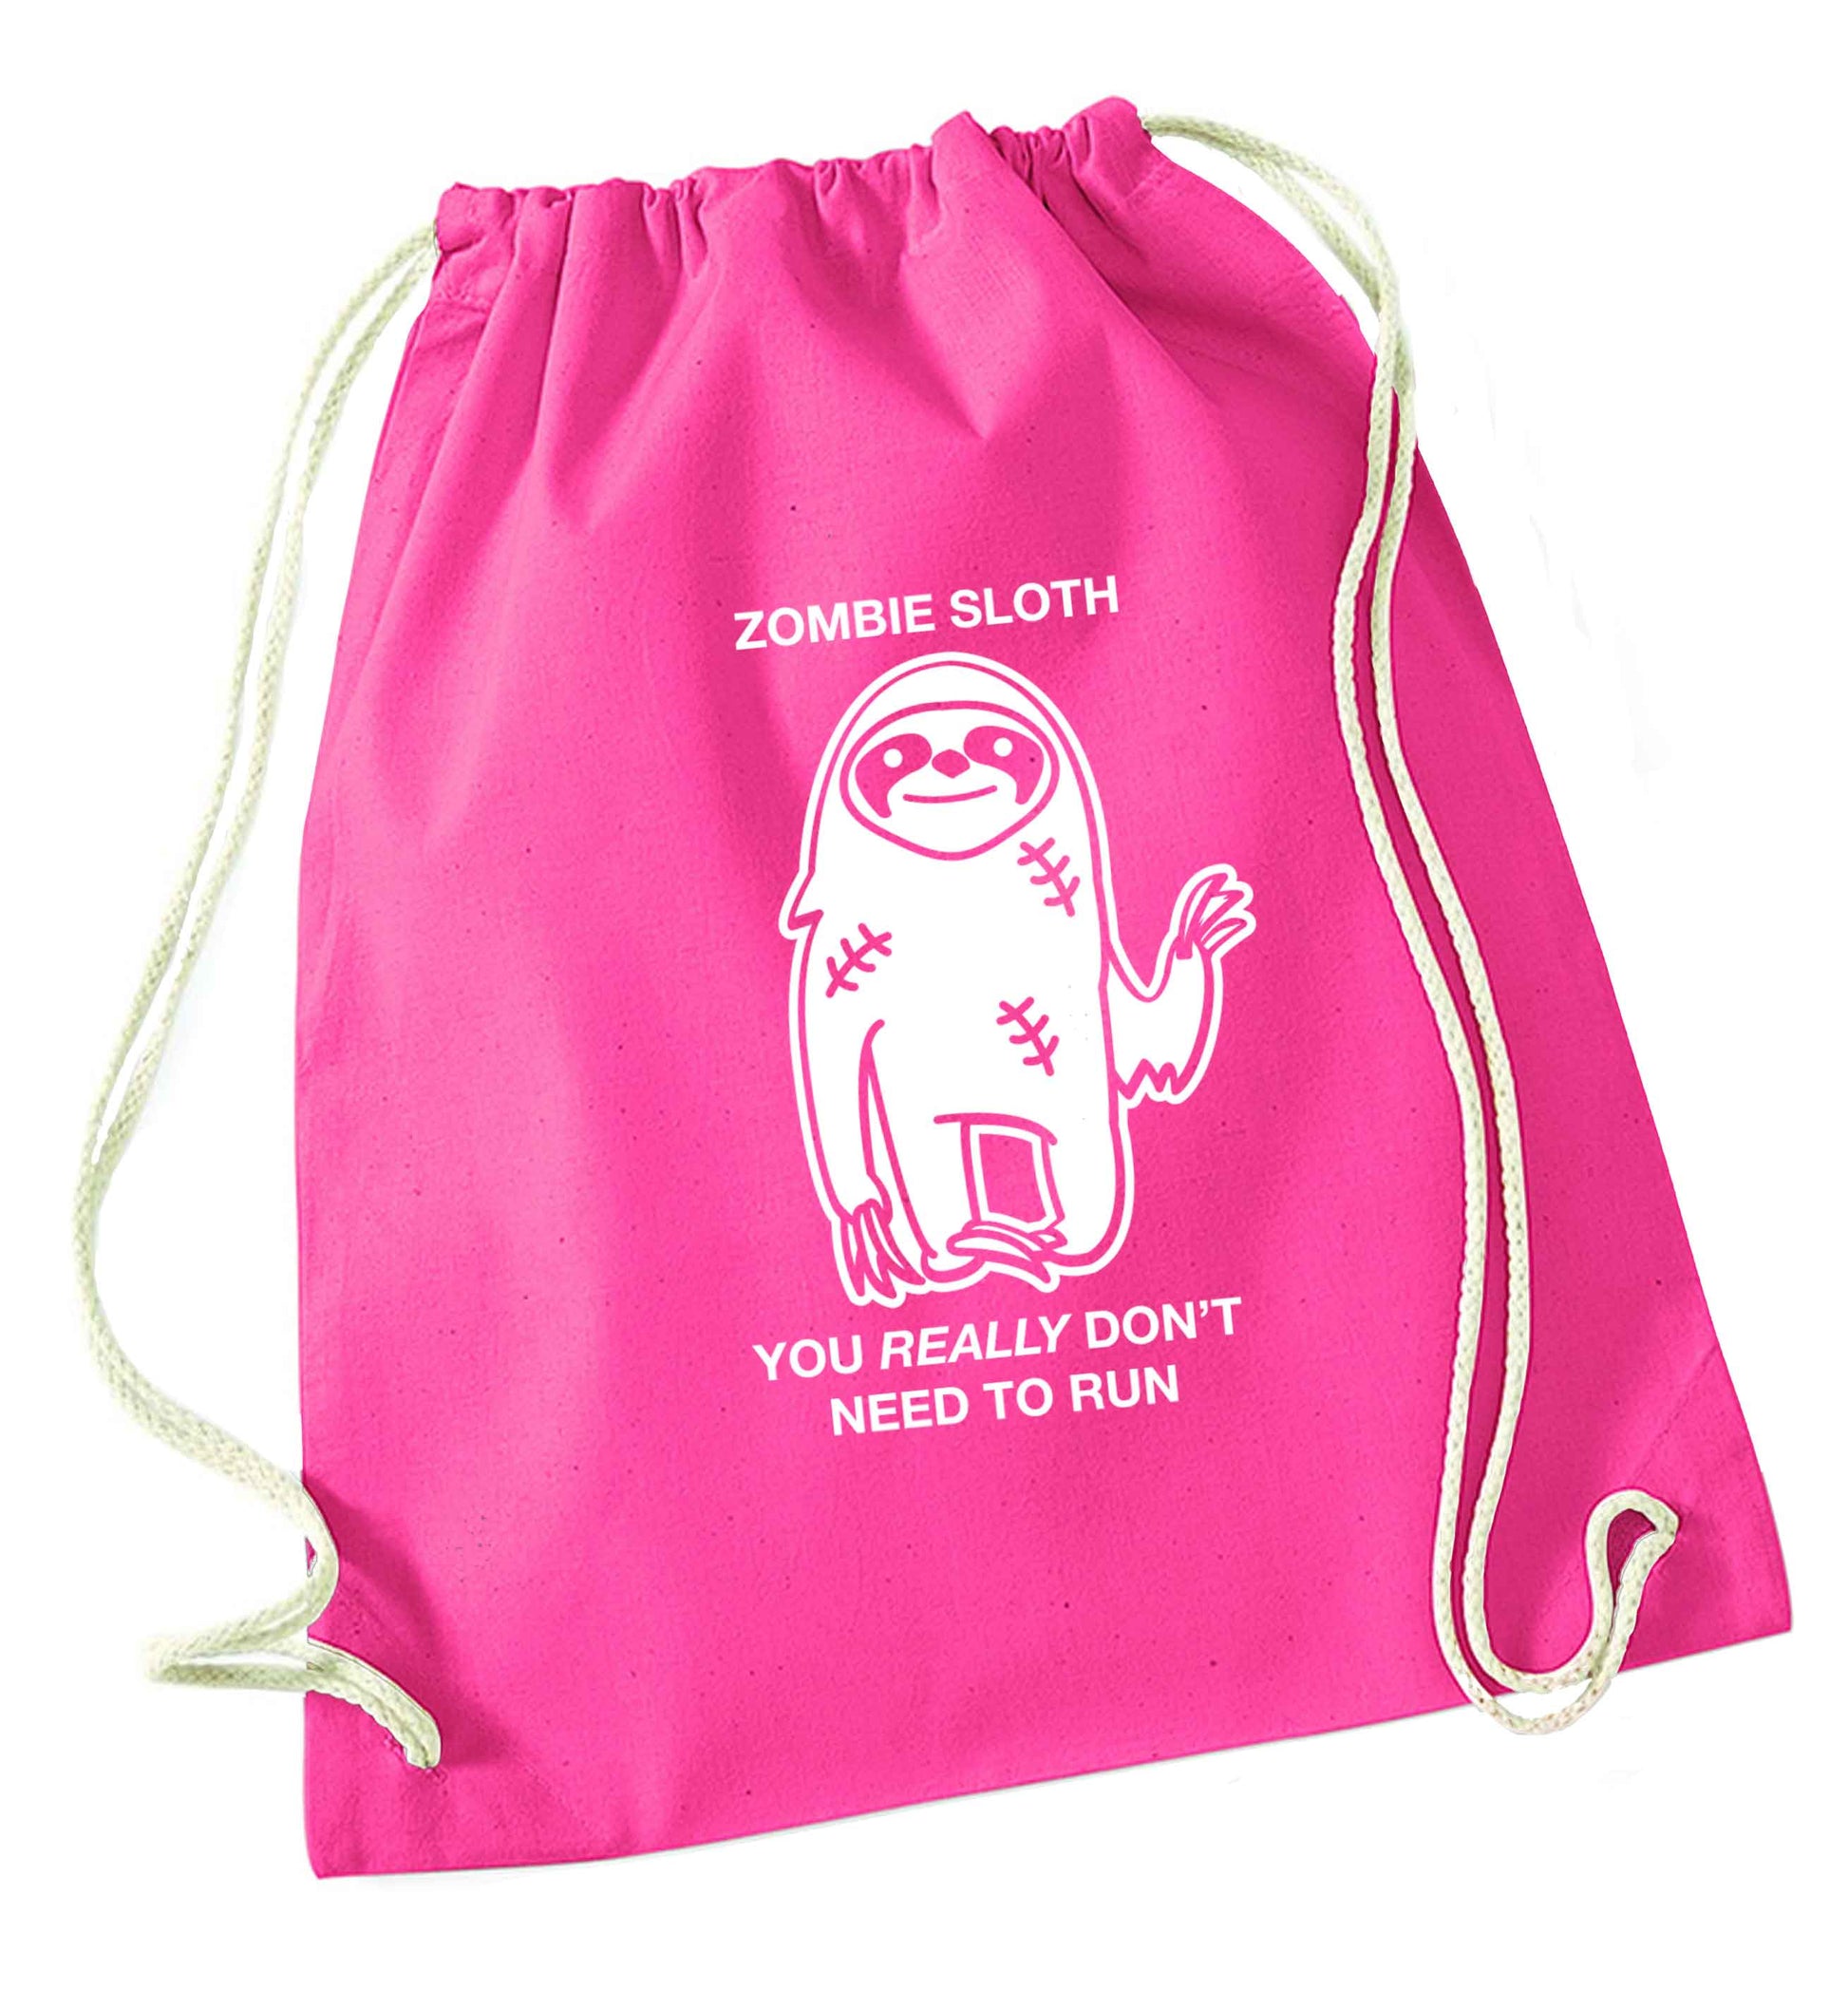 Zombie sloth you really don't need to run pink drawstring bag